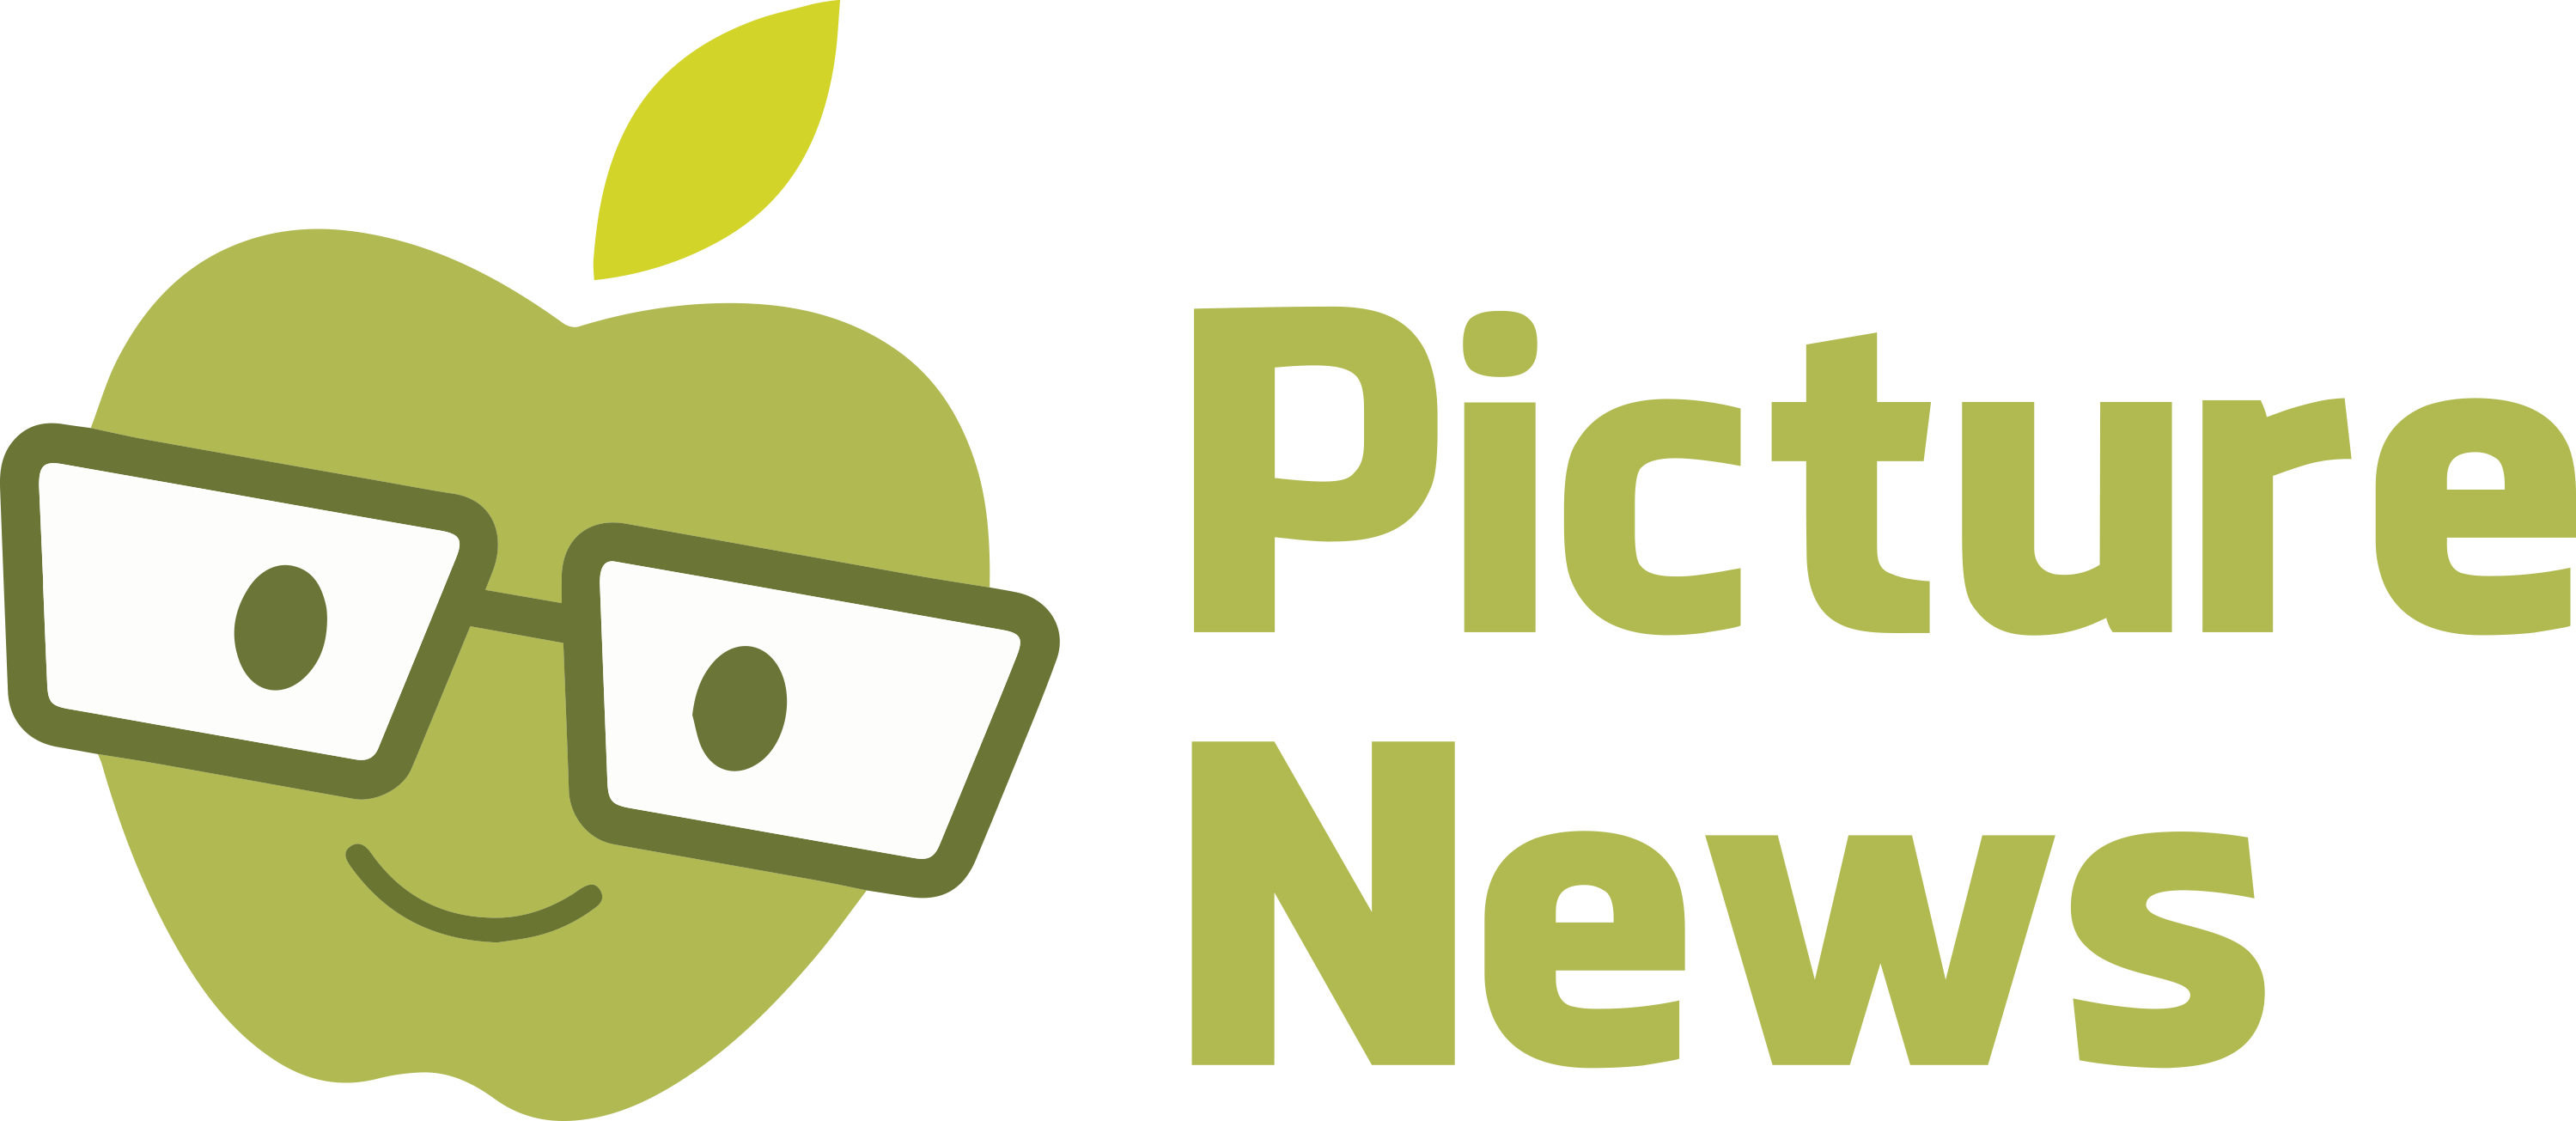 Picture News Ltd.